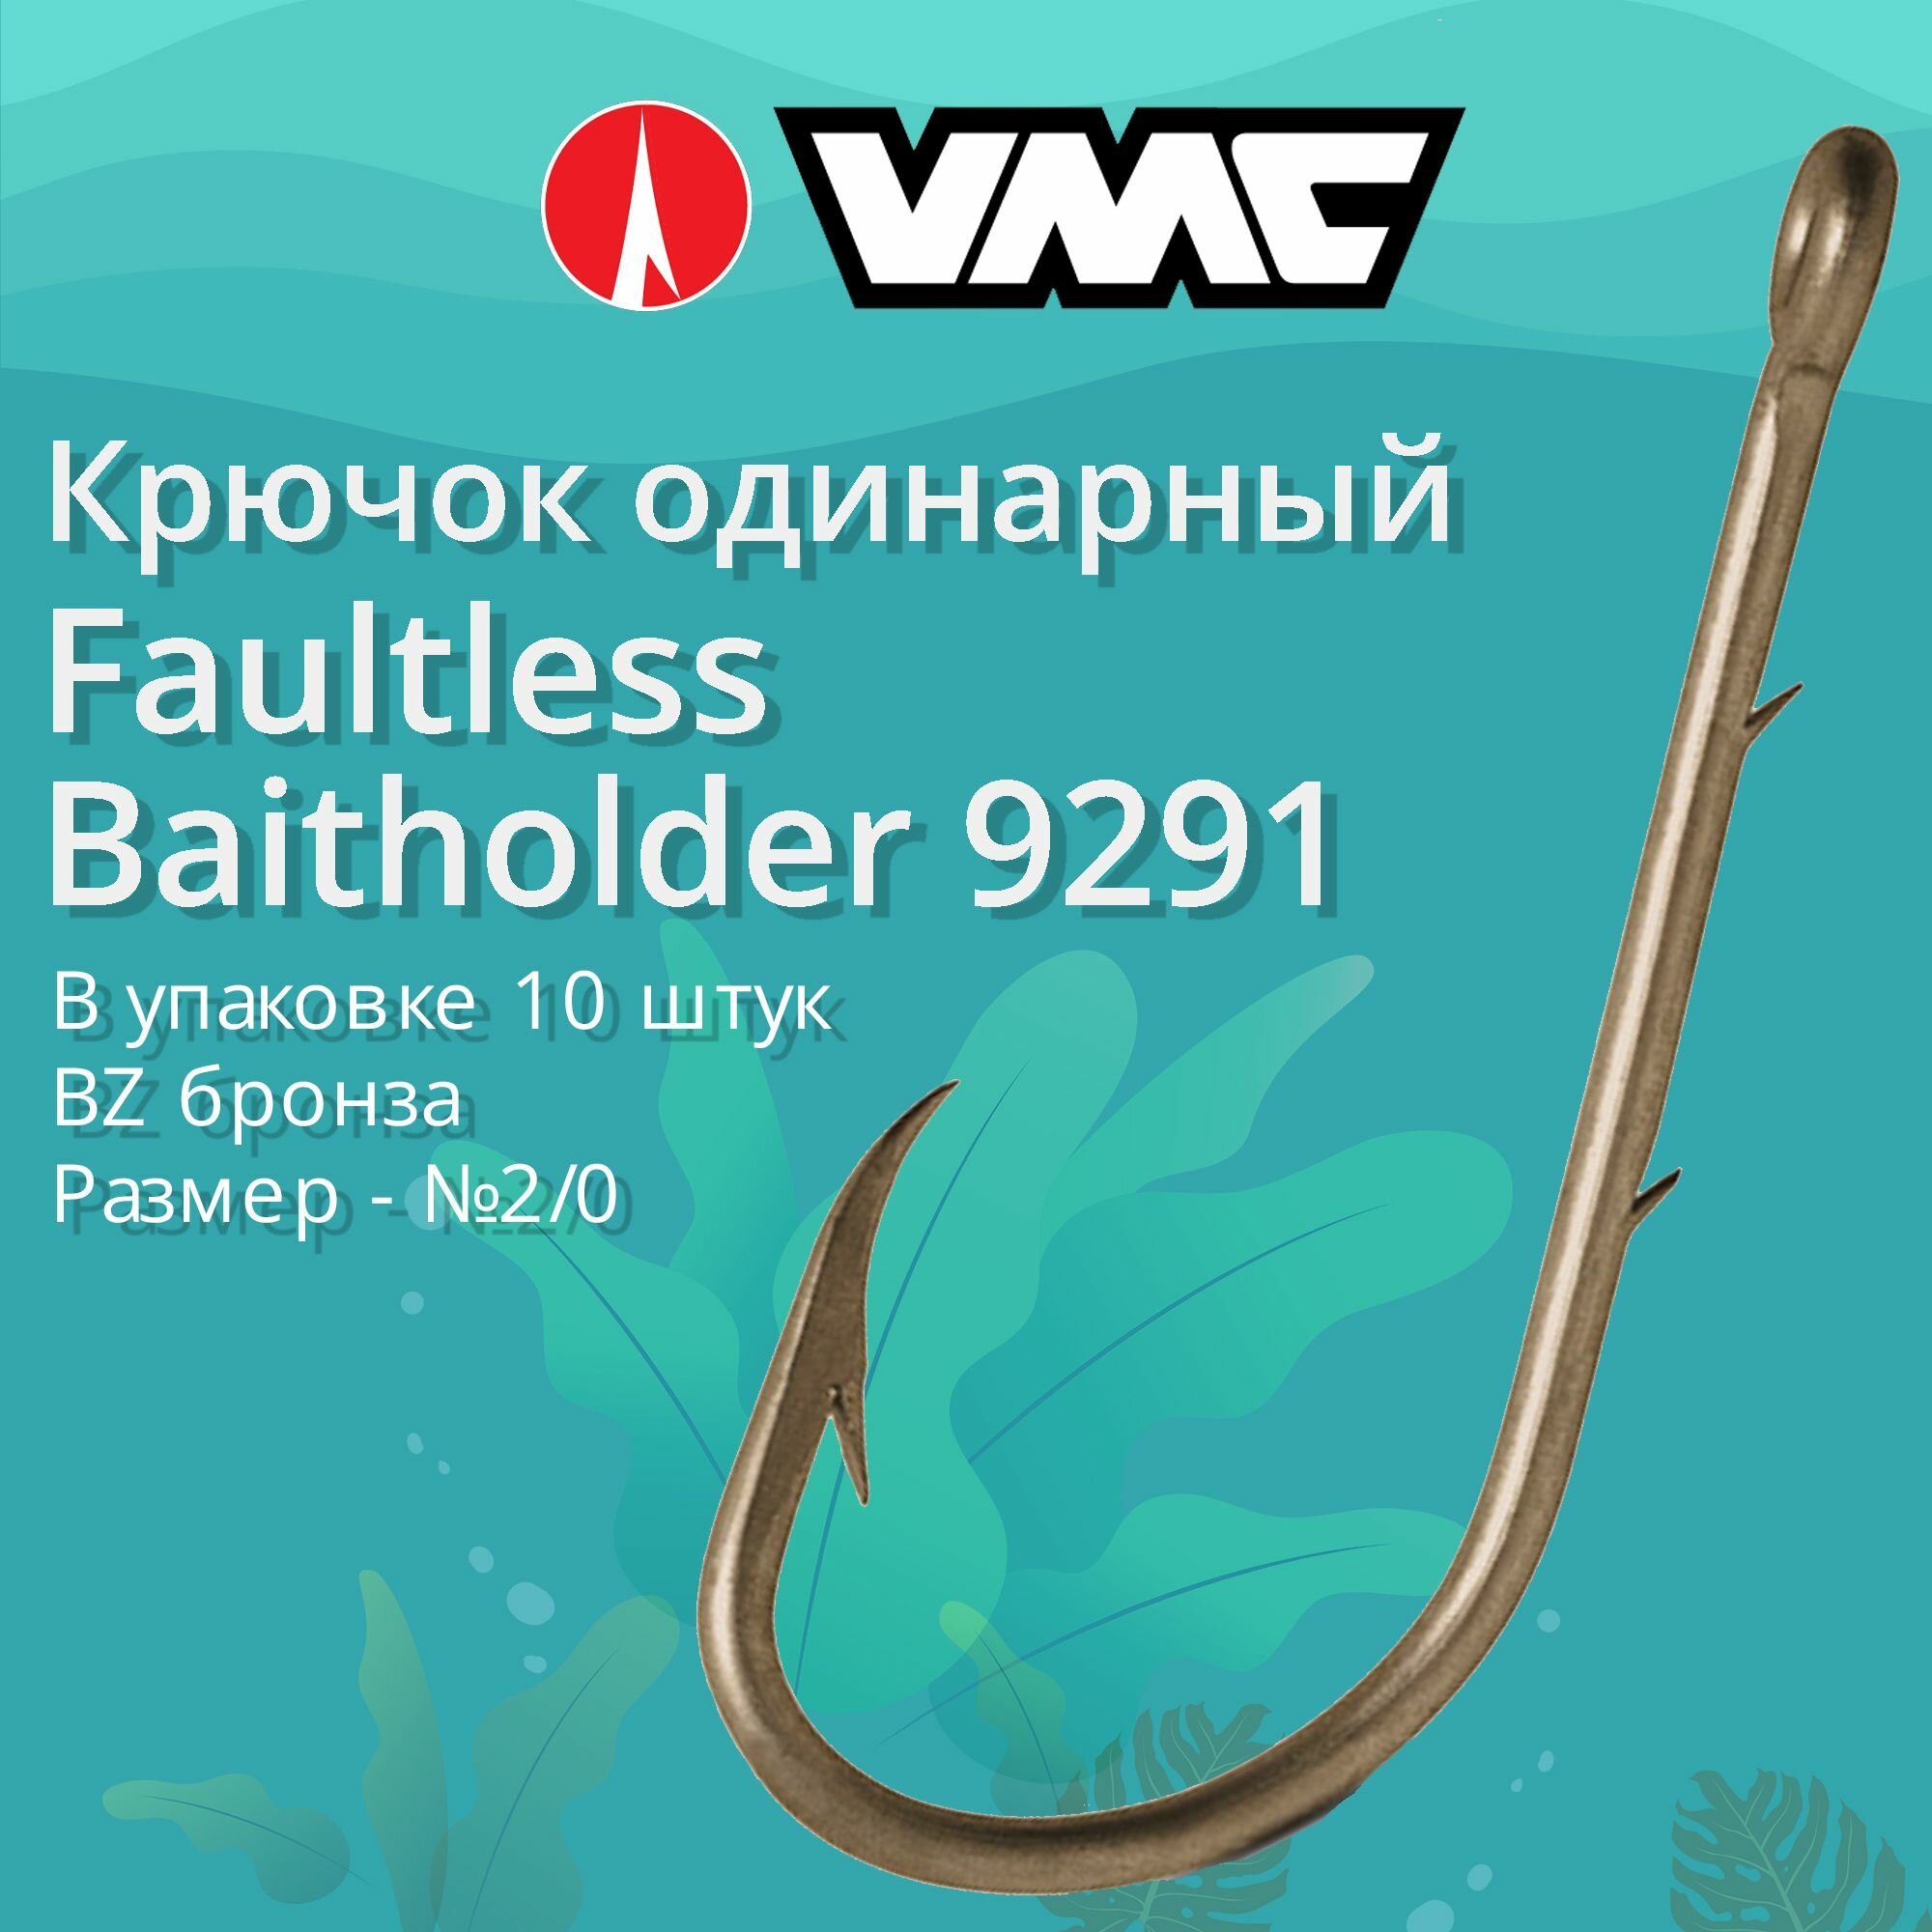 Крючки для рыбалки (одинарный) VMC Faultless Baitholder 9291 BZ (бронза) №2/0 упаковка 10 штук